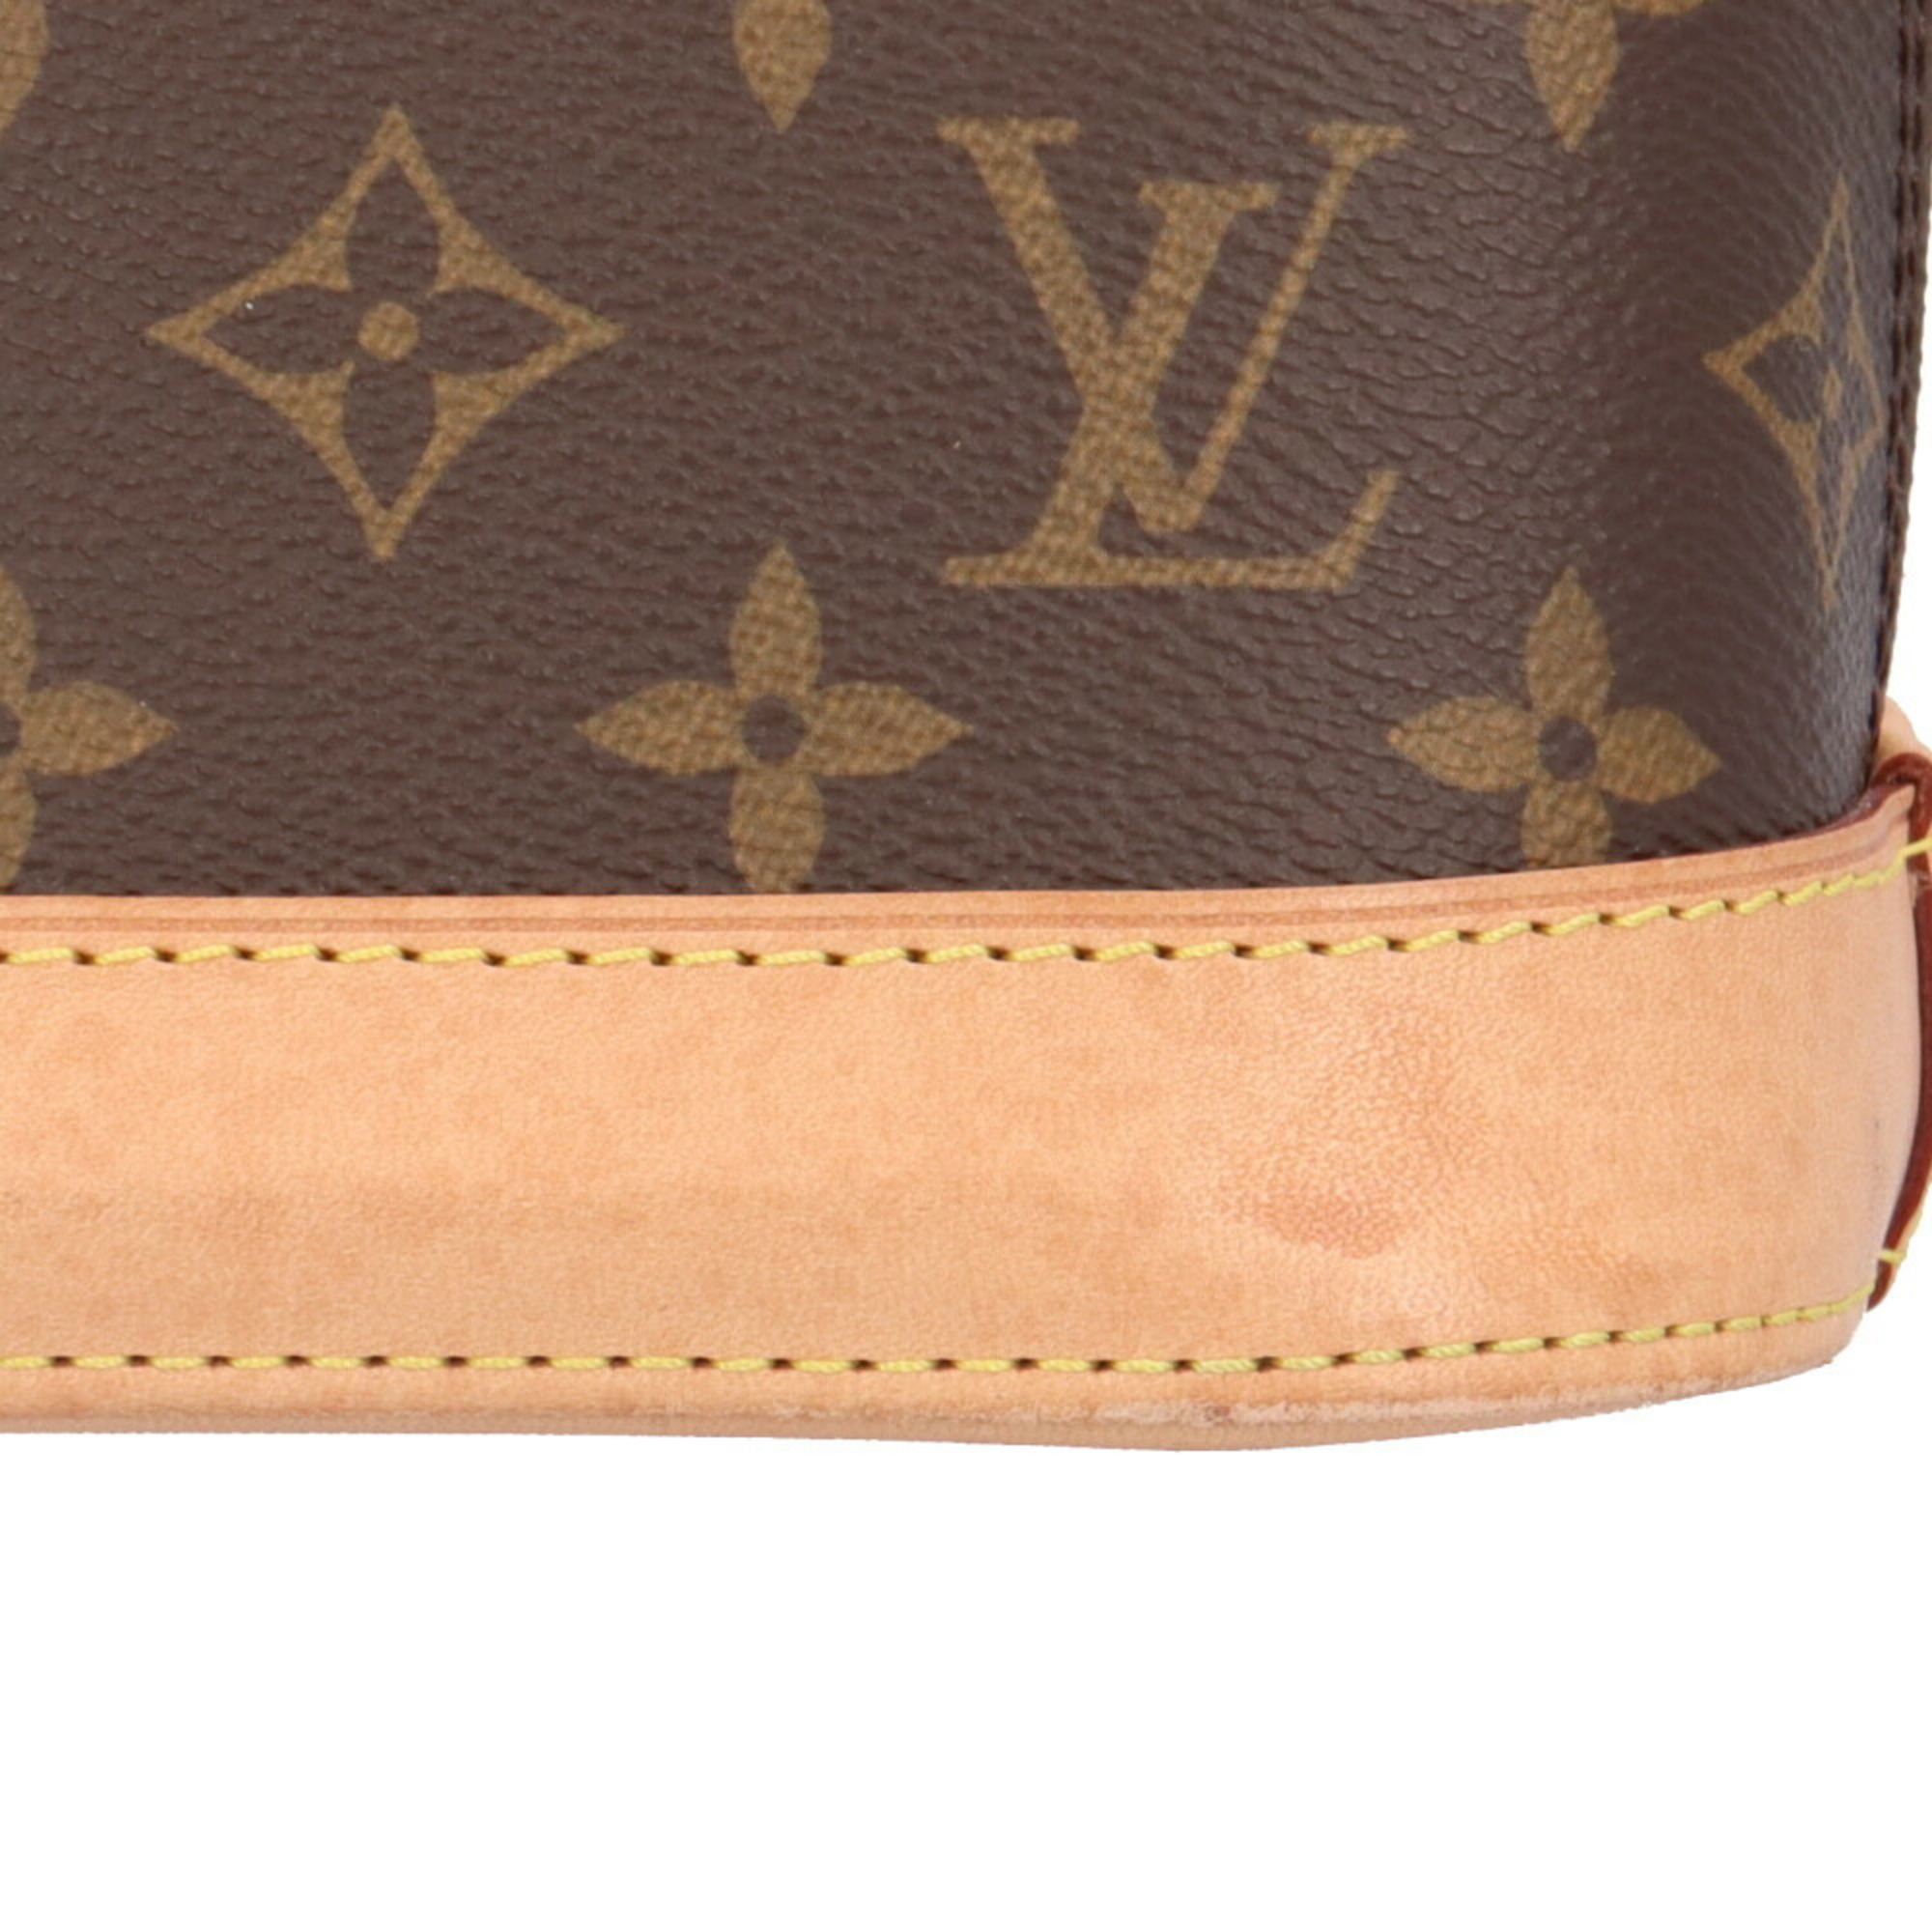 Louis Vuitton Alma BB Monogram Shoulder Bag Canvas M53152 Brown Women's LOUIS VUITTON 2way BRB10010000013384